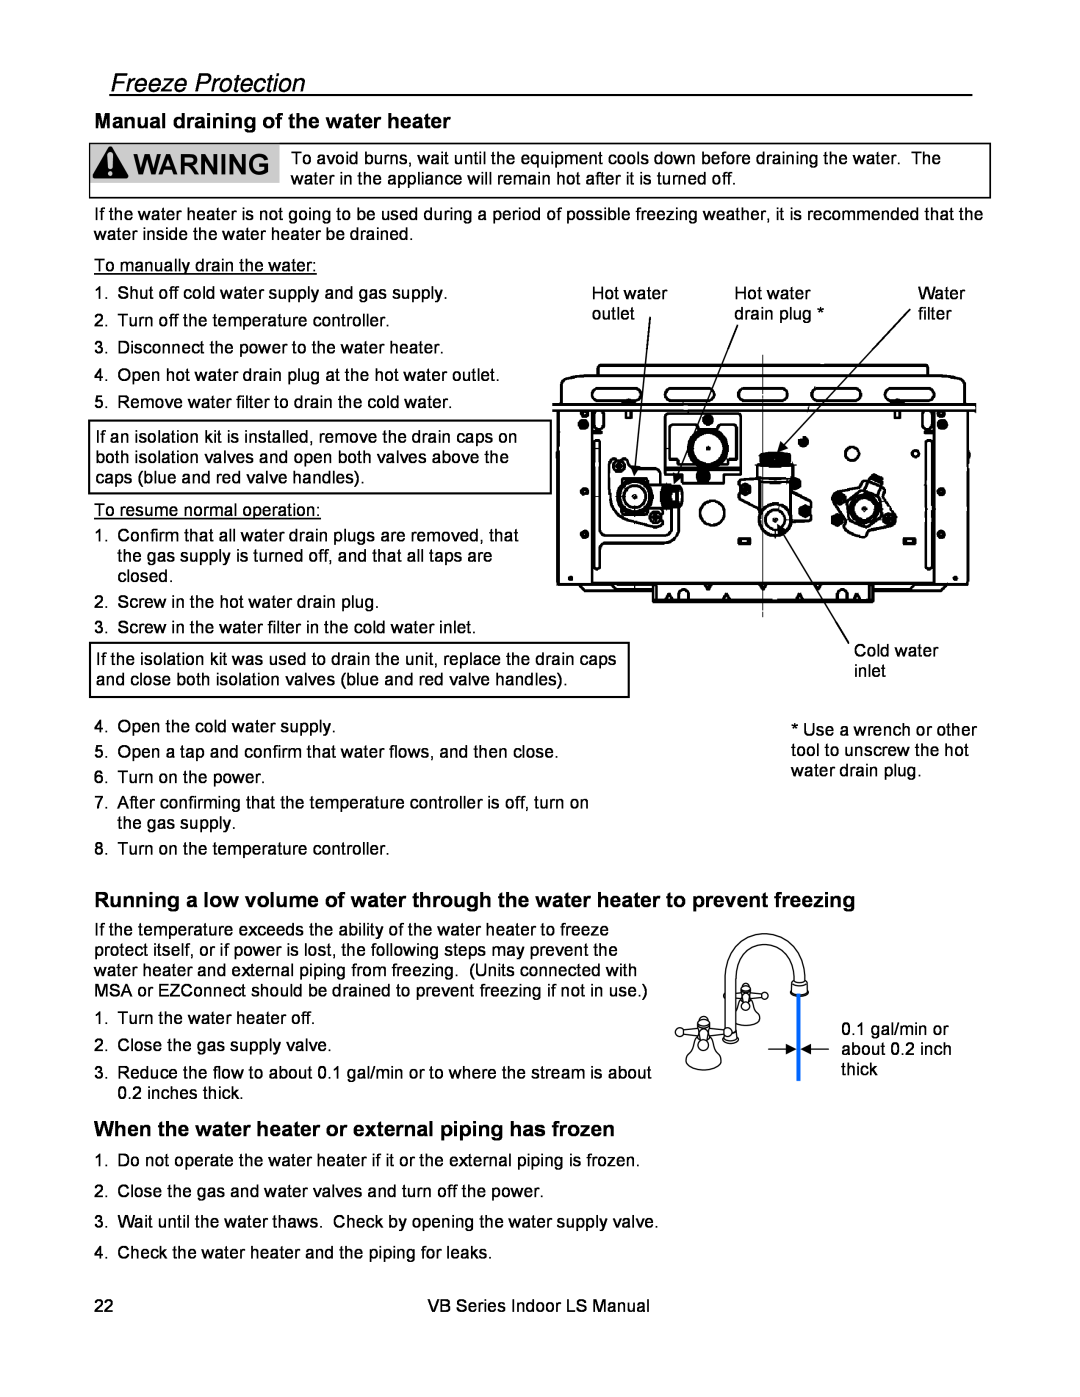 Rinnai RL94I, RL75I installation manual Freeze Protection, Manual draining of the water heater 